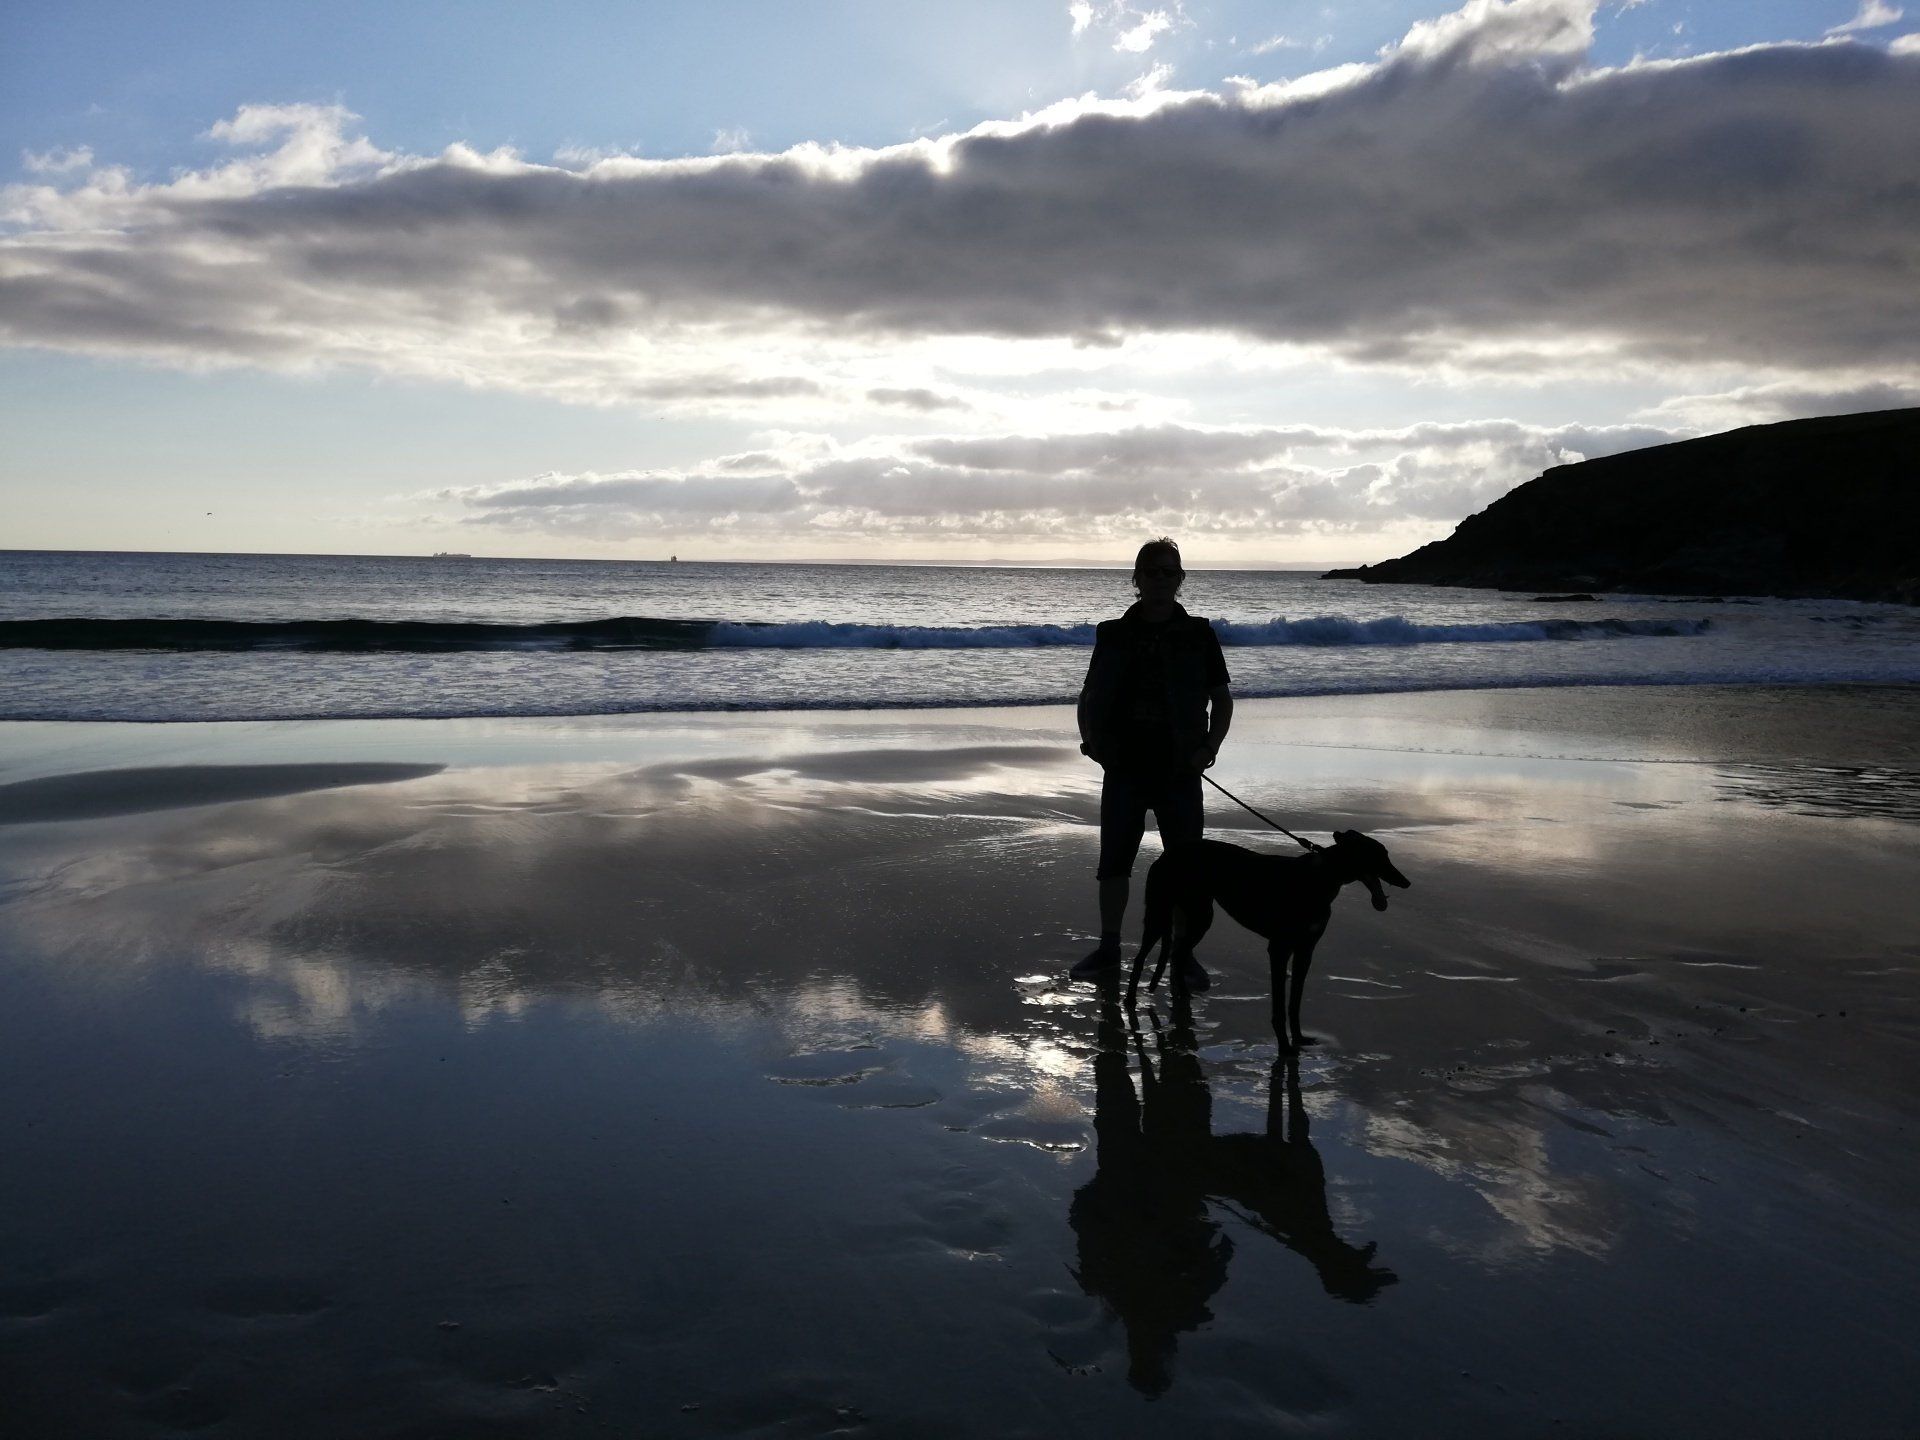 Cornwall, Poldhu, beach, The Lizard, Cornwall, sunset, silhouette, man and dog